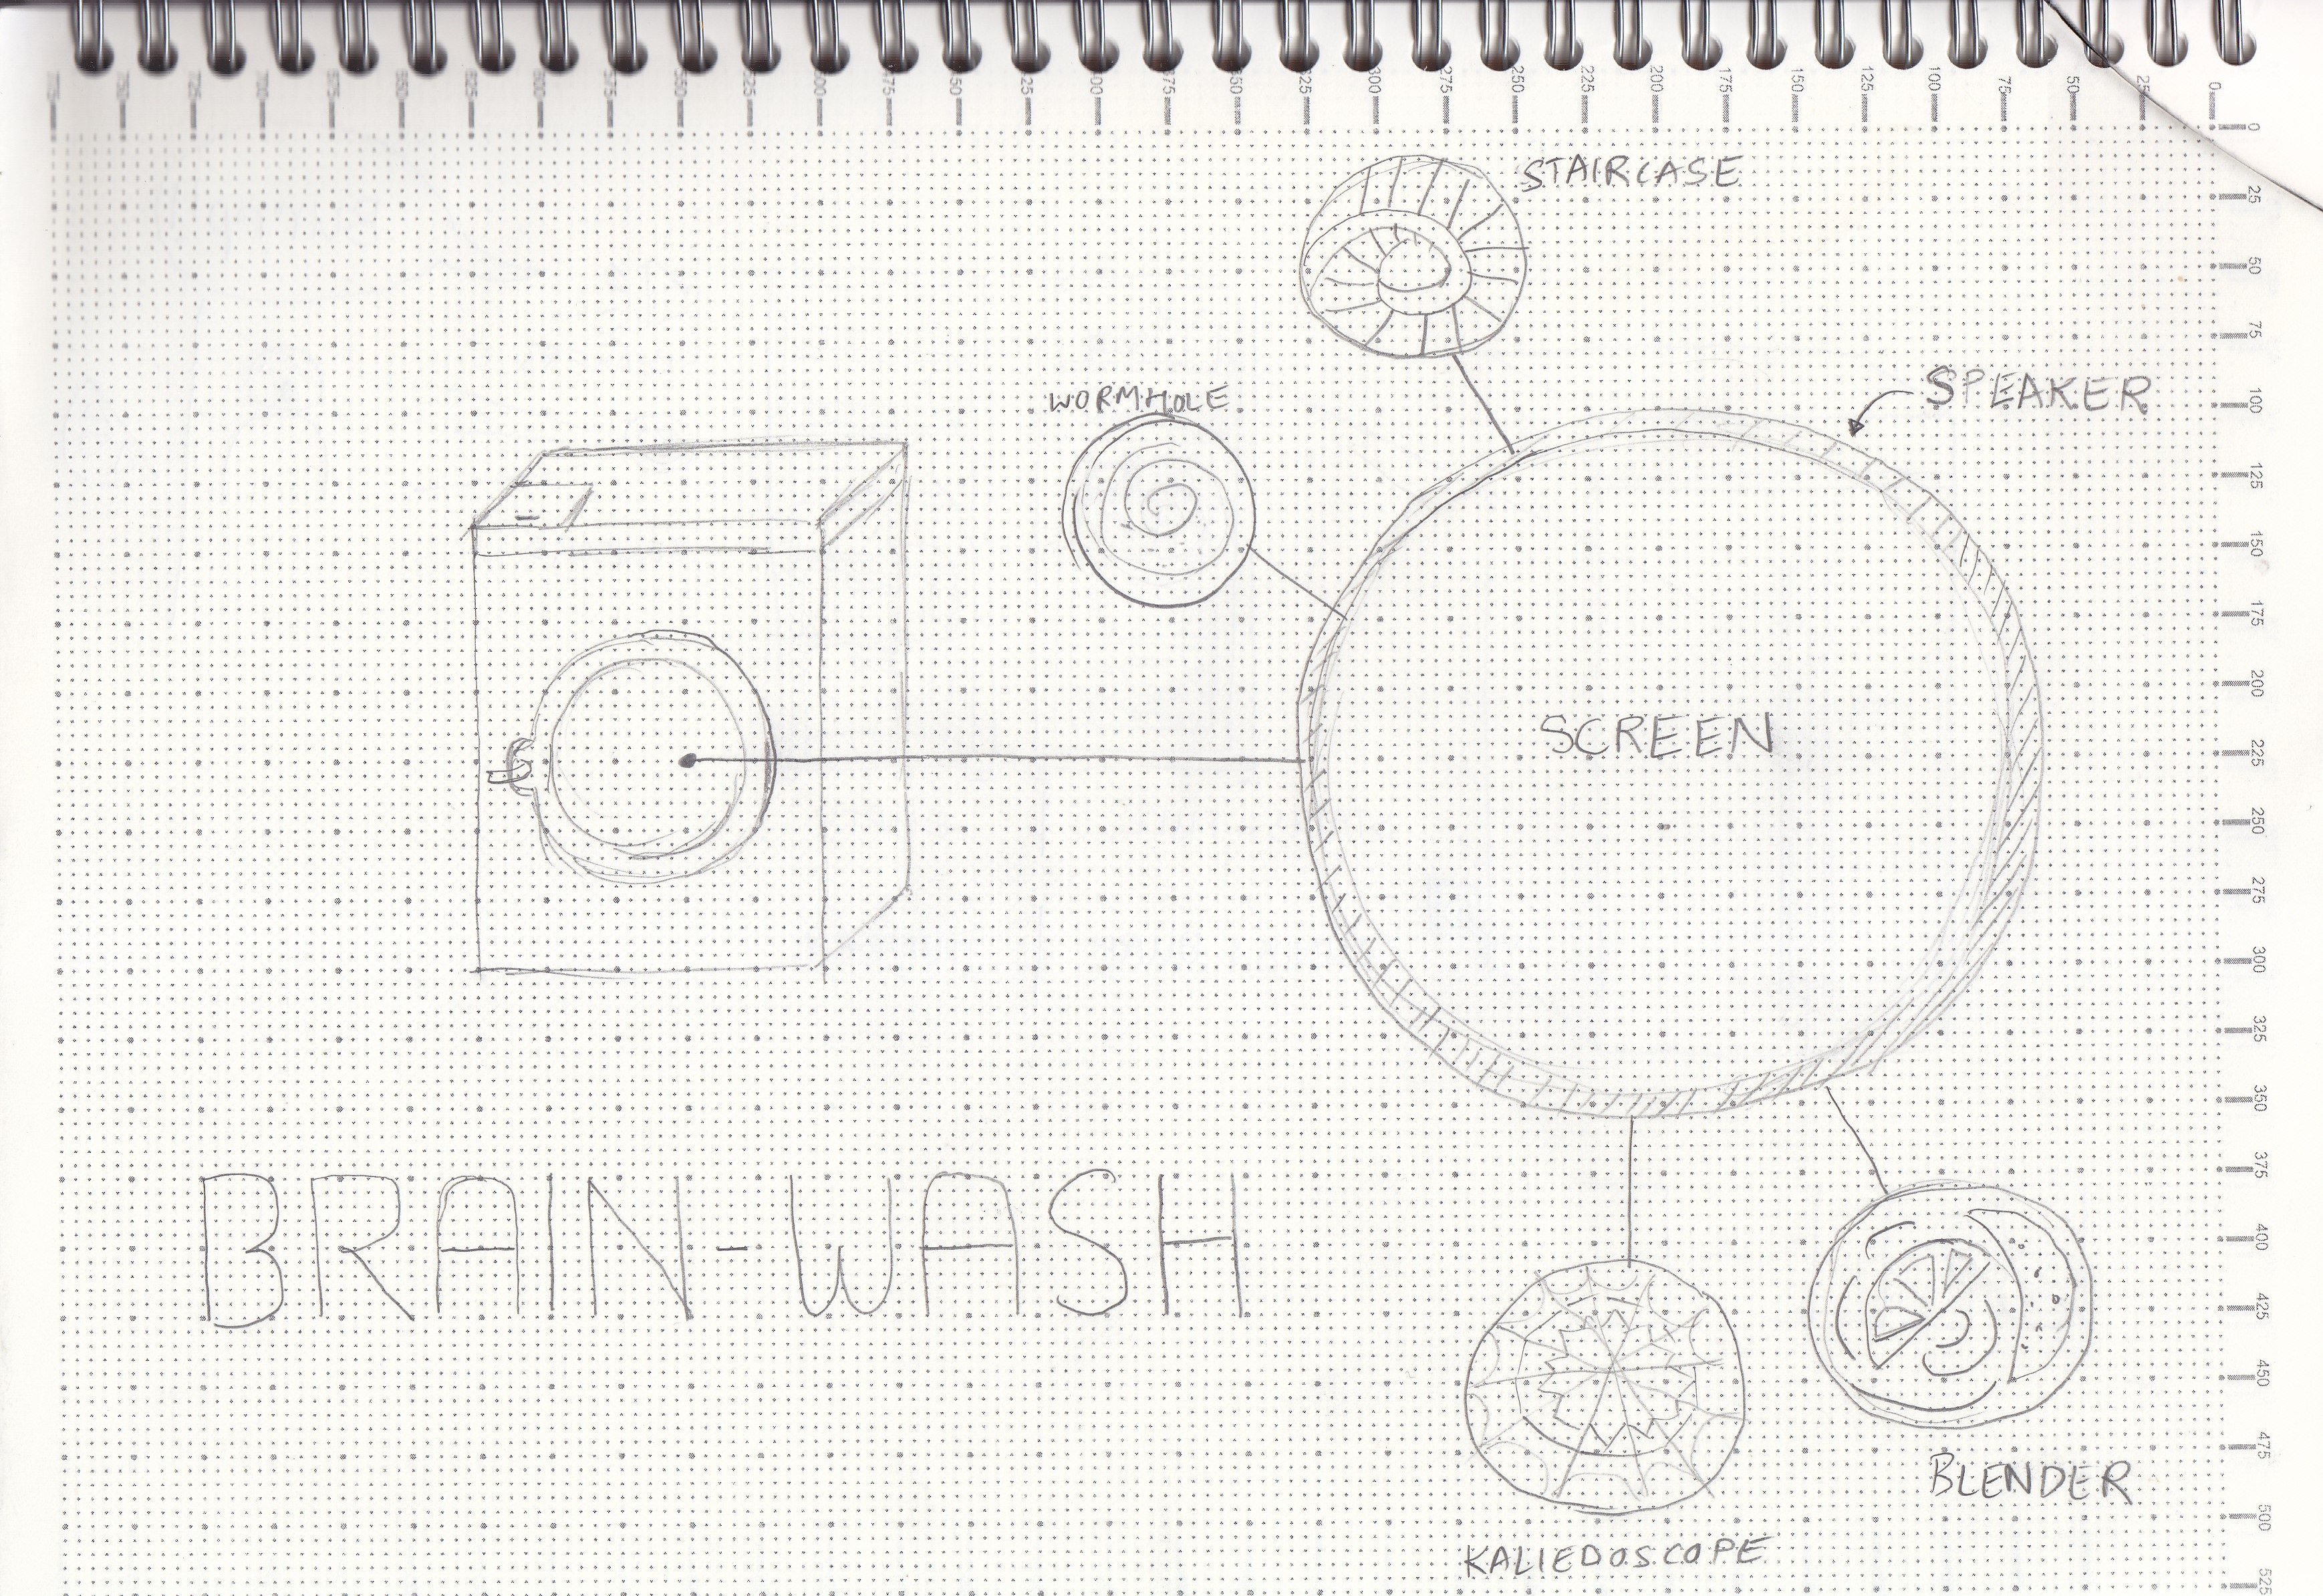 Brainwash sketch